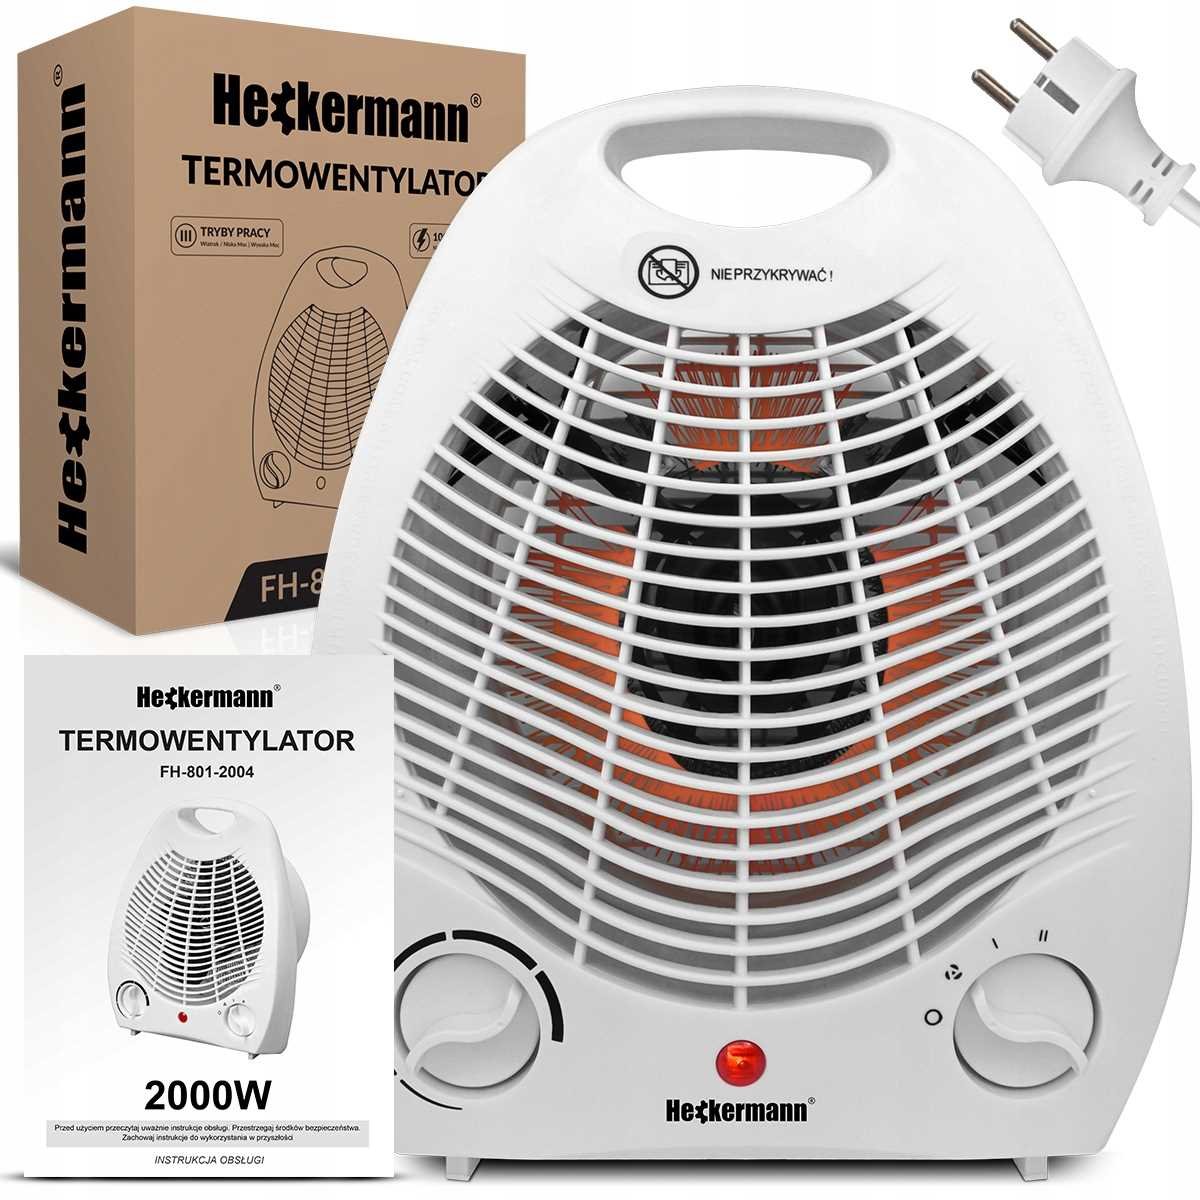 Heckermann Termowentylator Fh-801-2004